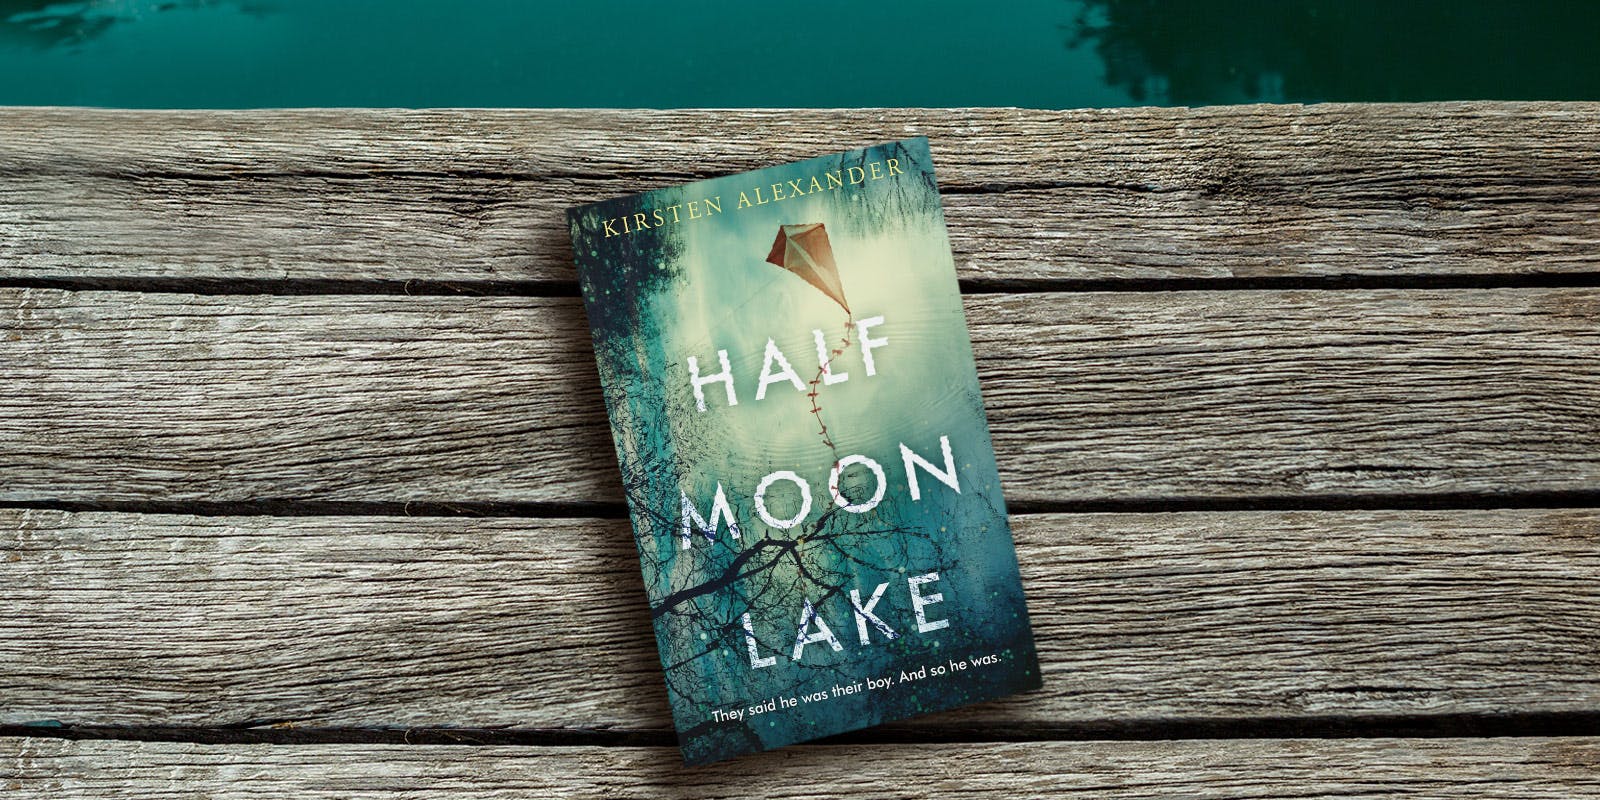 Researching Half Moon Lake